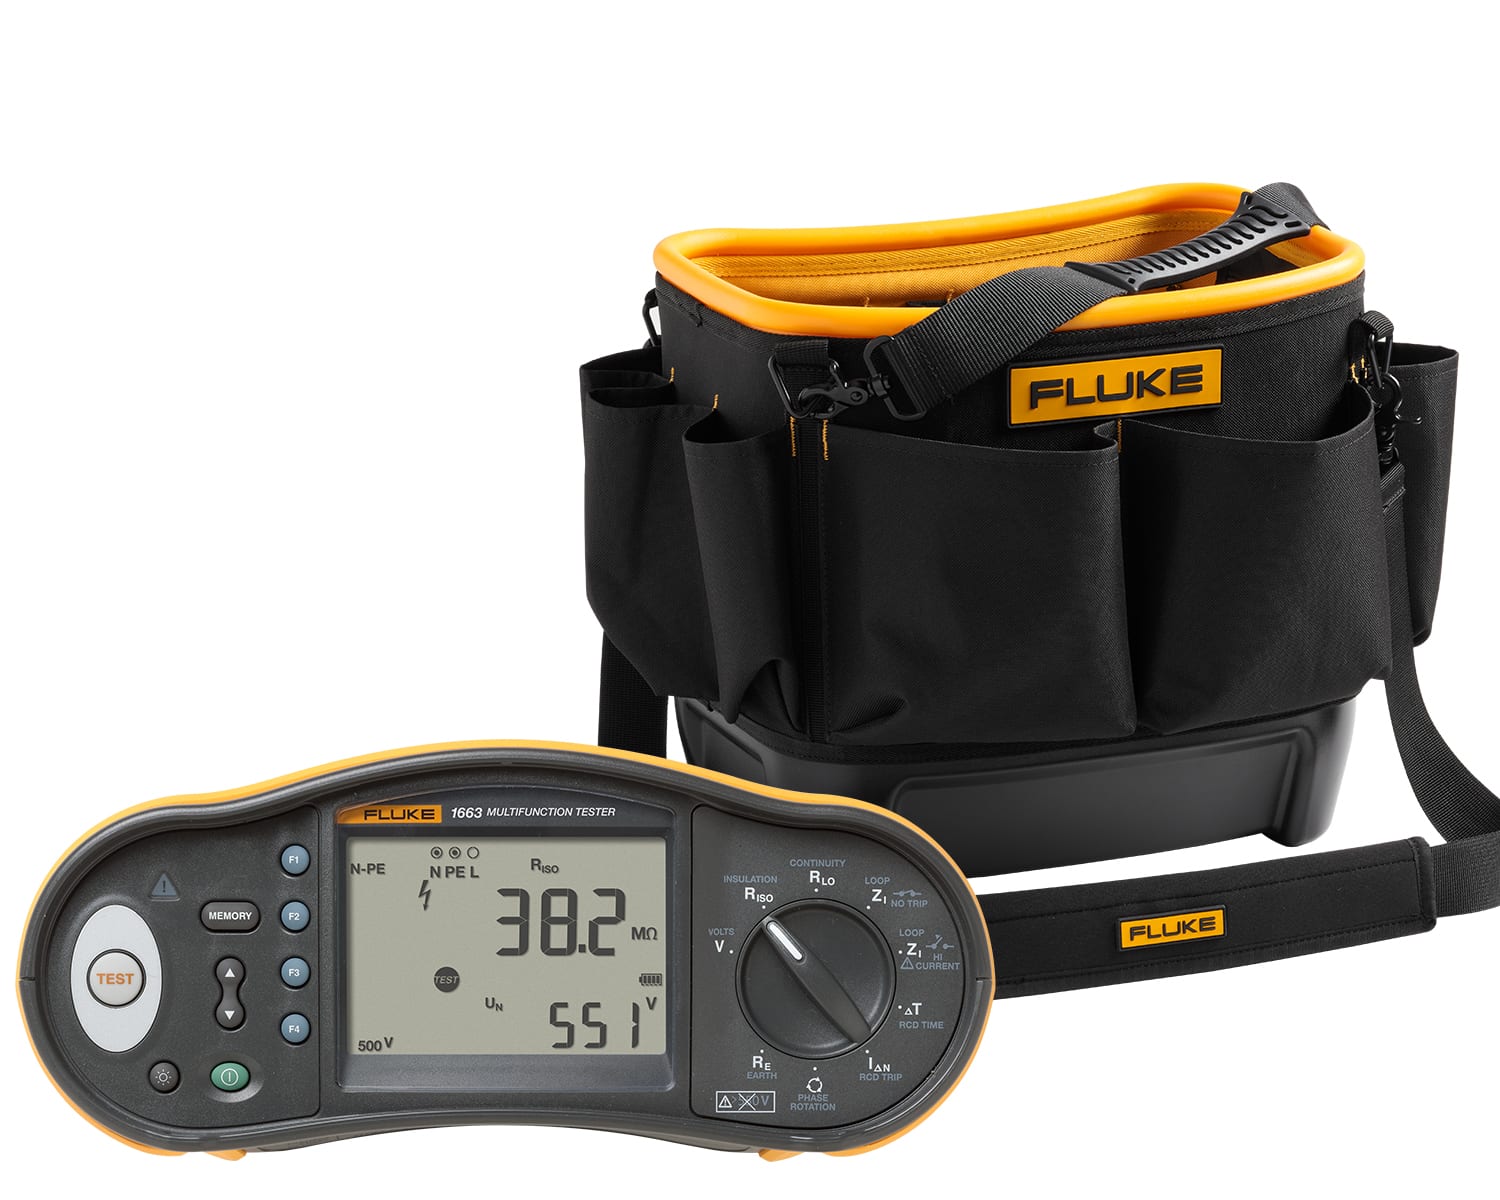 Fluke - Fluke 1663 + un sac de rangement d outils rigide Fluke TB25